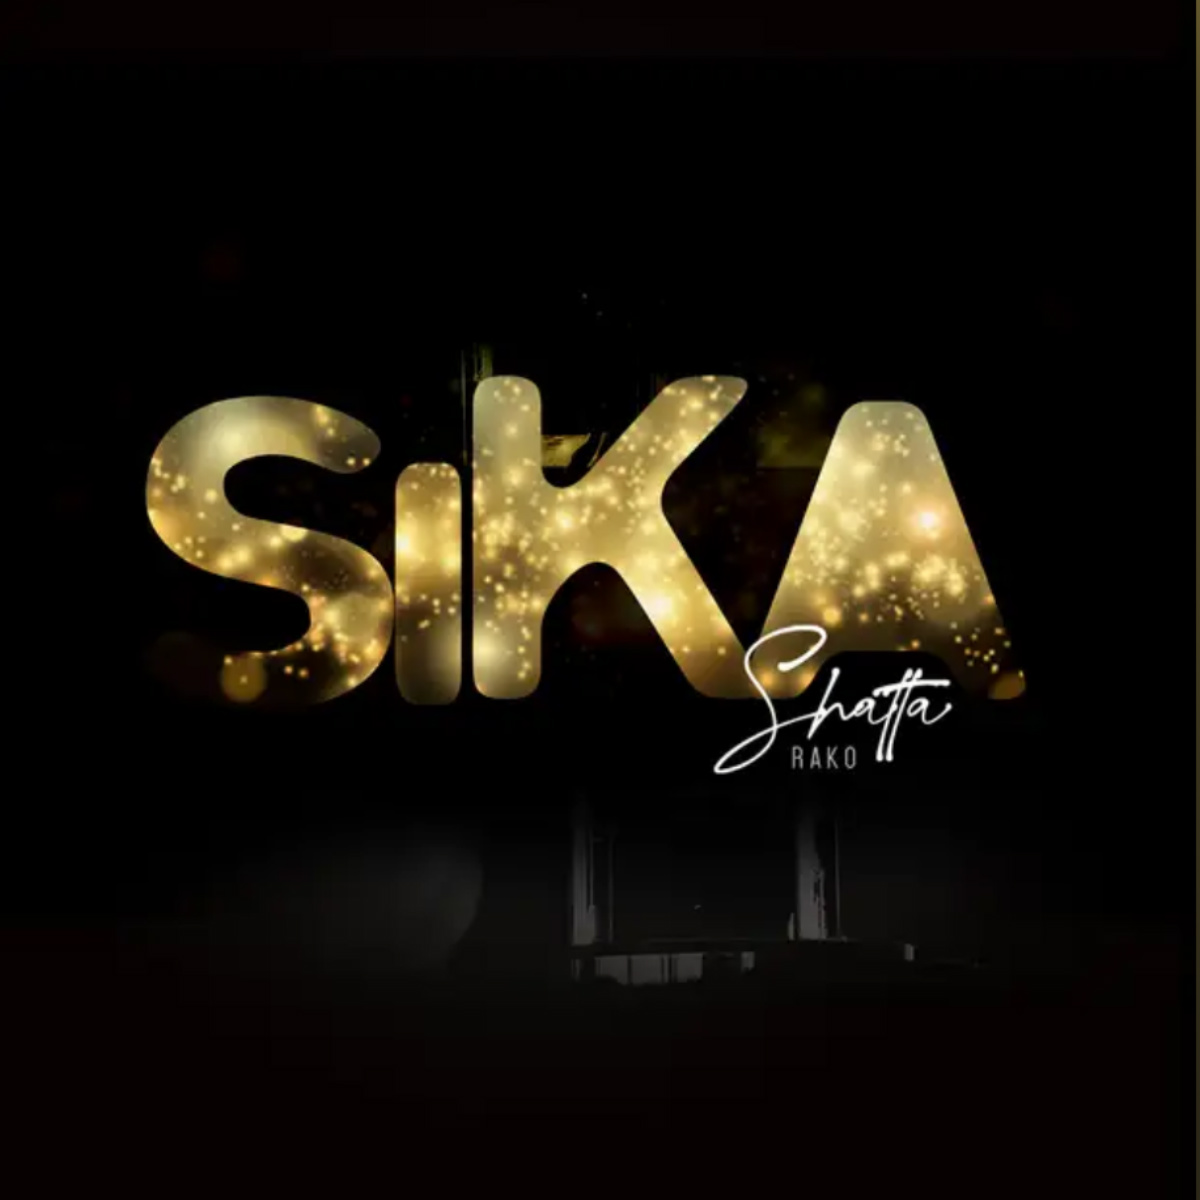 Listen Up: Shatta Rako drops new single ‘Sika’